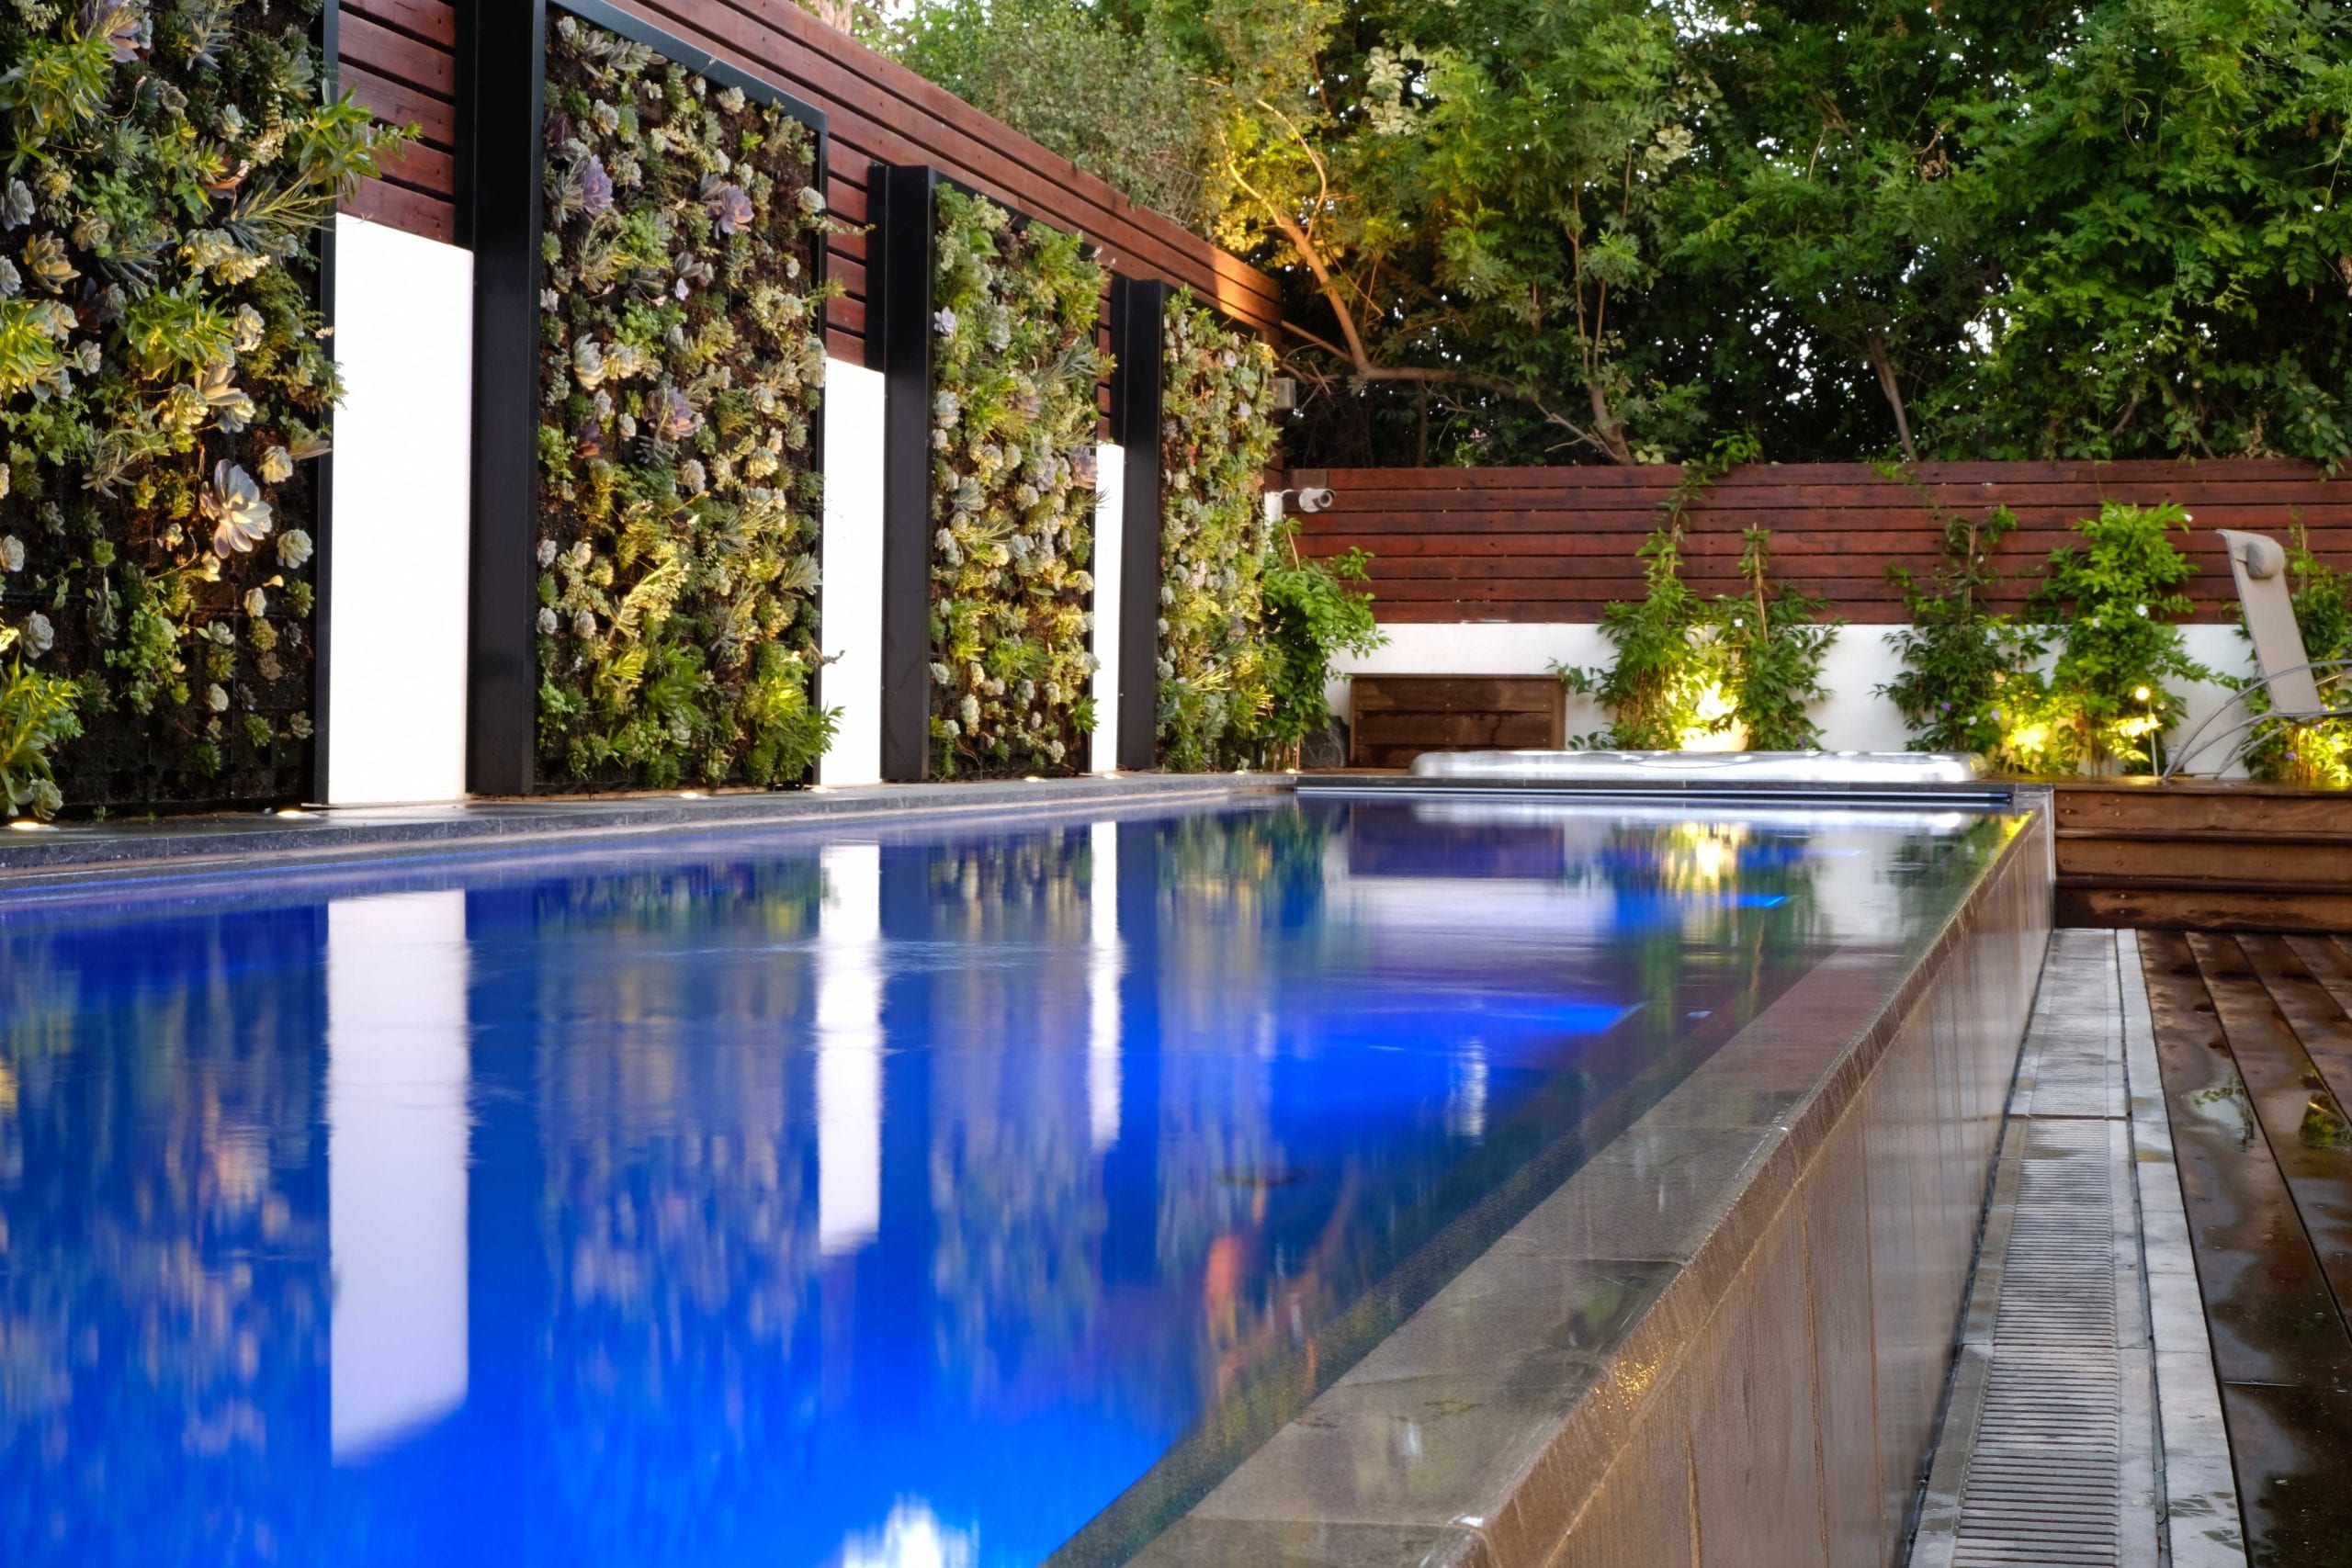 Fiberglass pool installation by professional pool resurfacing contractors.